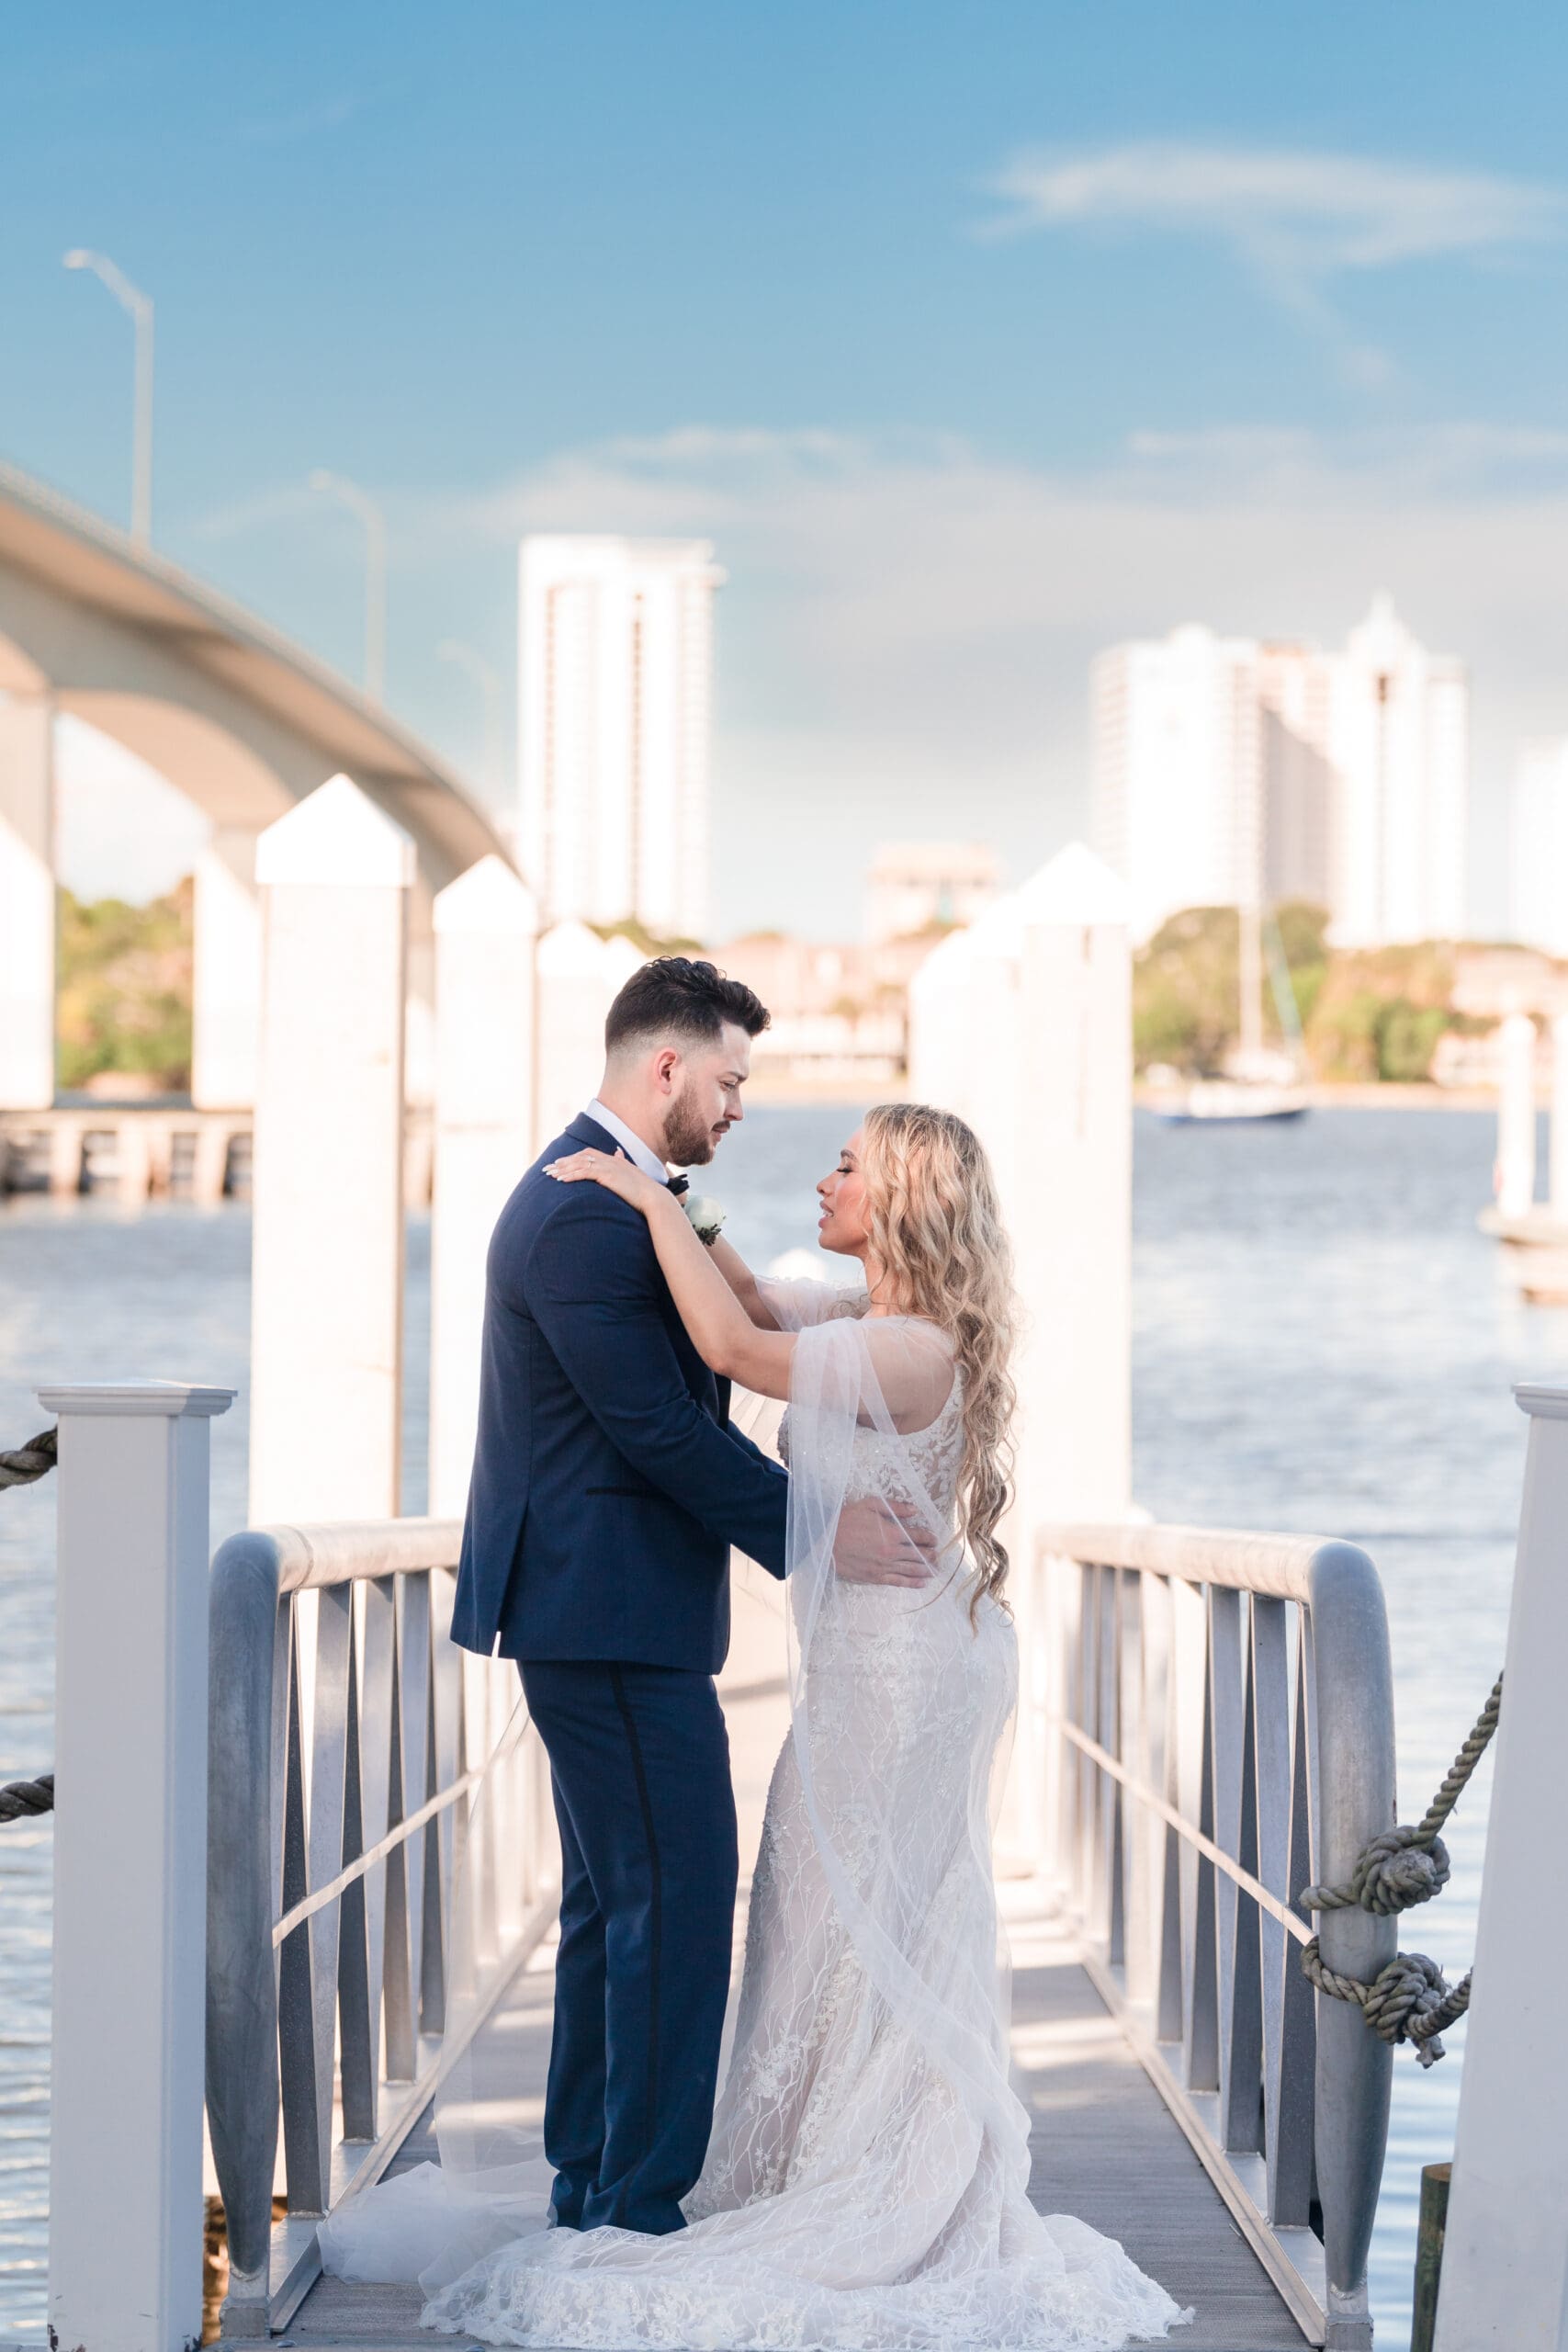 Jenn & Jazer – Crystal Ballroom Sunset Harbor Wedding – Photography